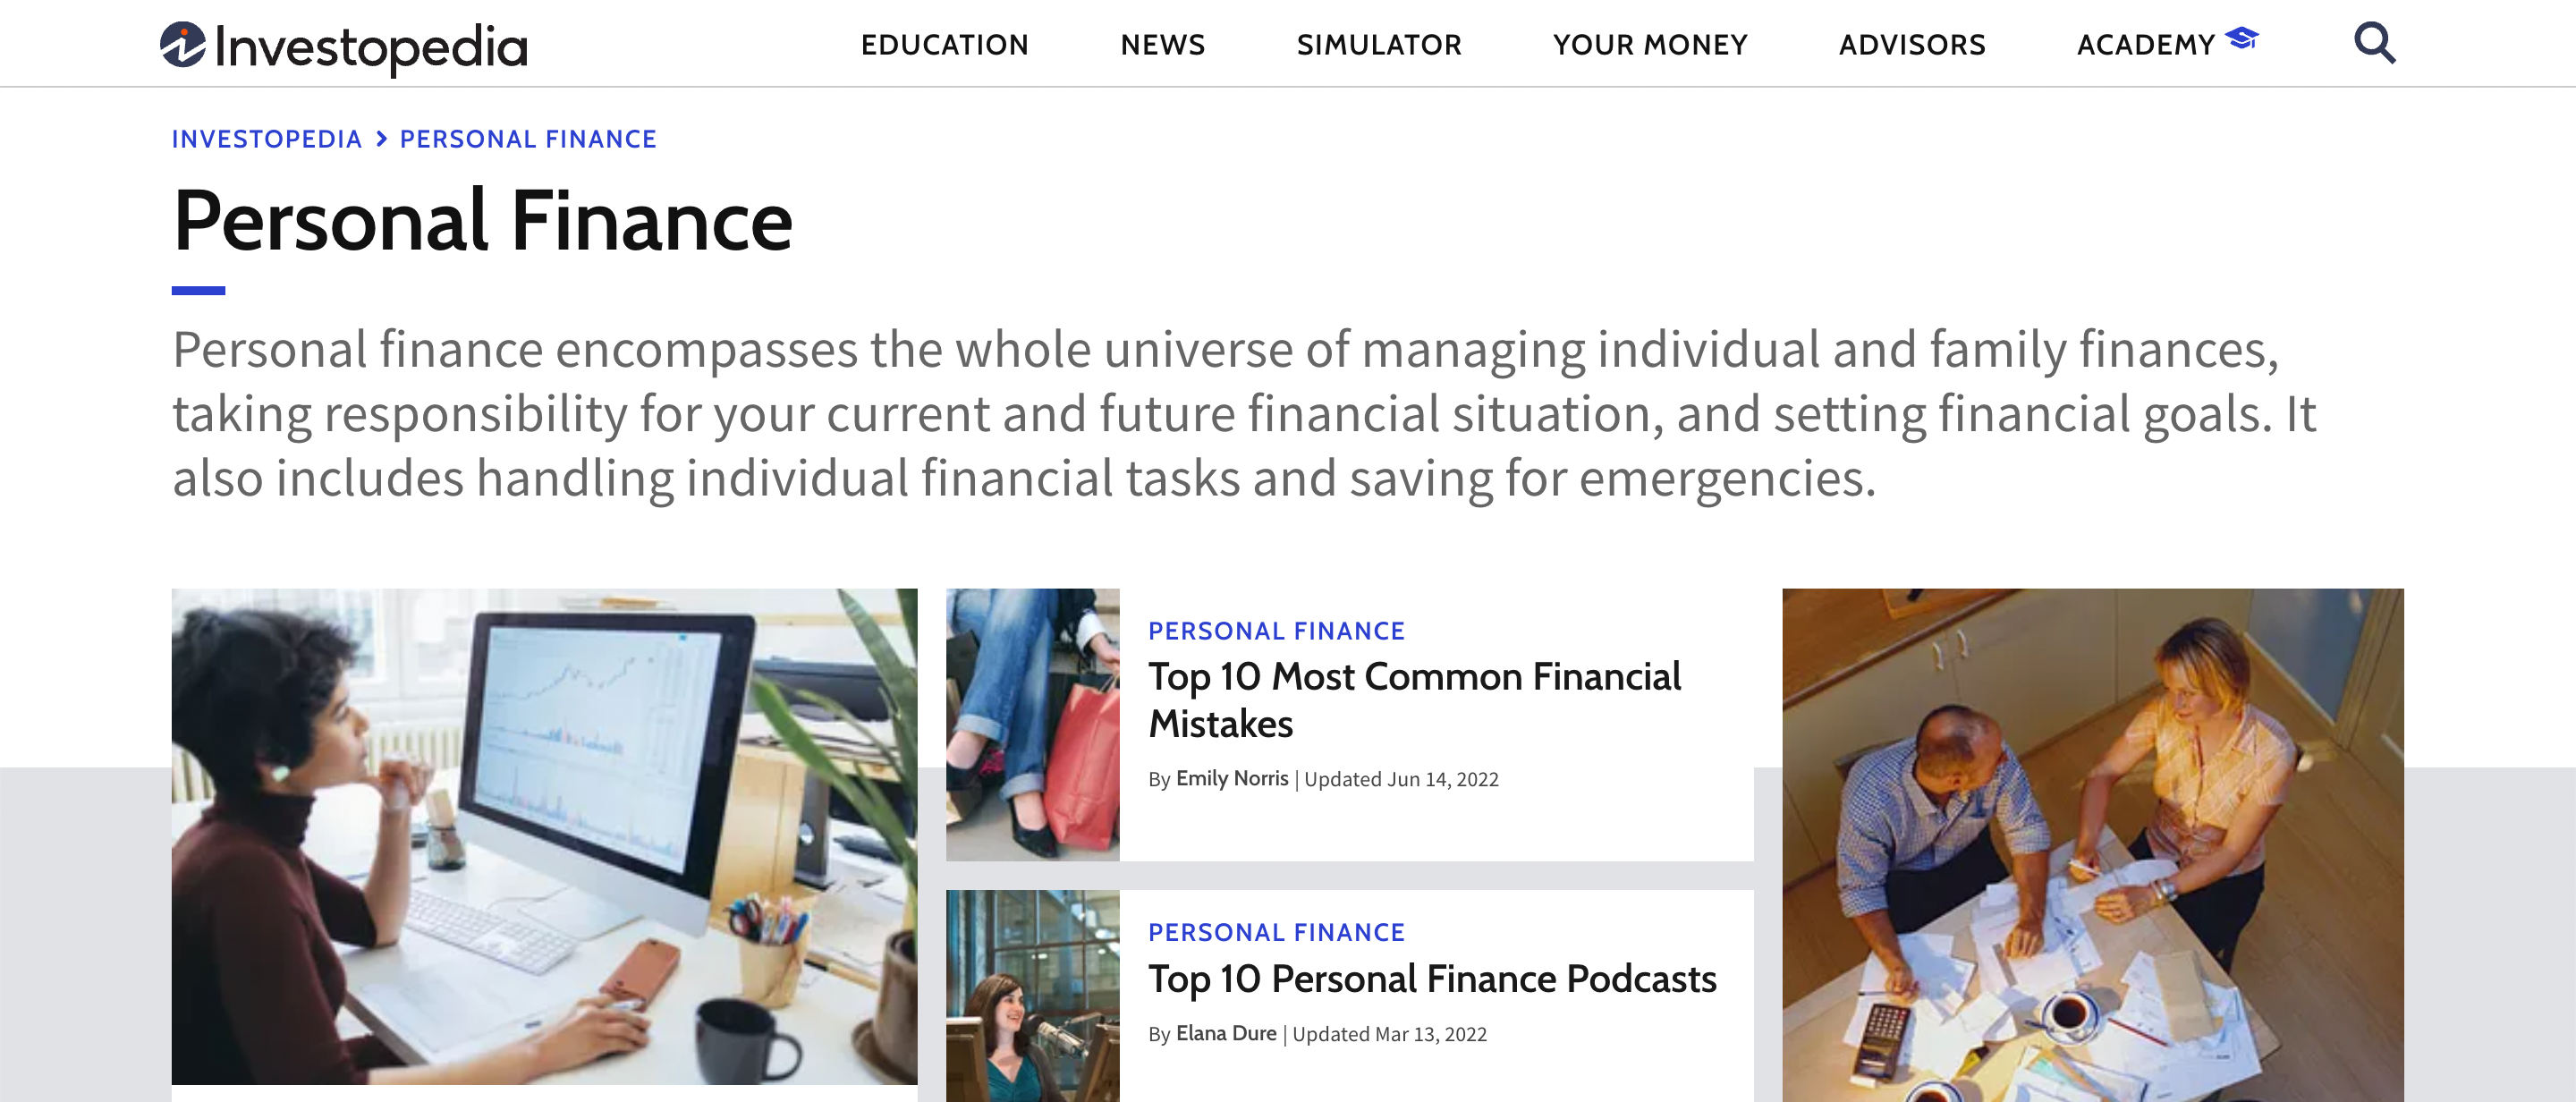 Investopedia.com personal finance section screenshot